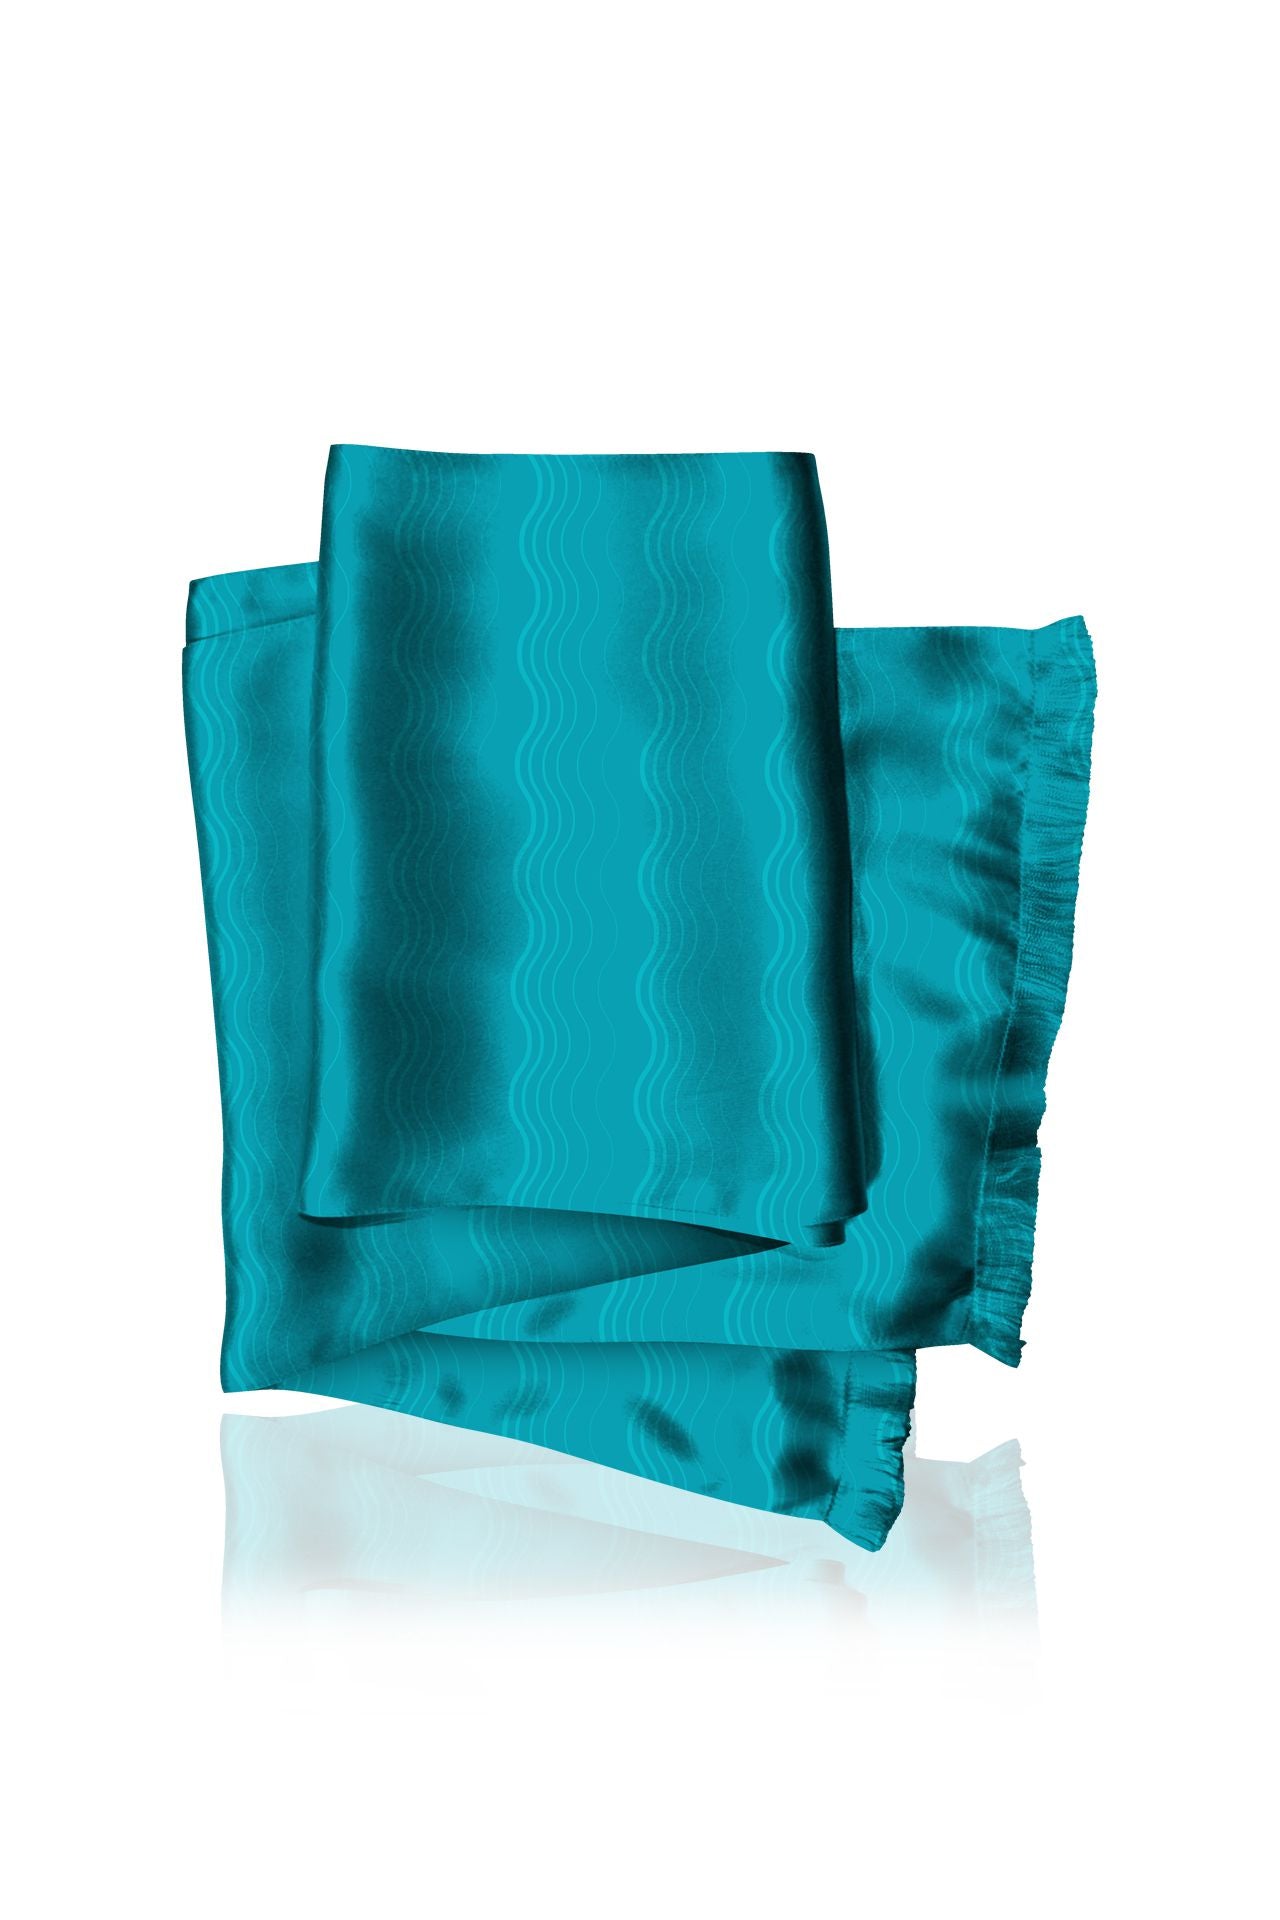 "Kyle X Shahida" "designer scarves for women" "blue silk scarf" "best silk scarves" "female scarf"